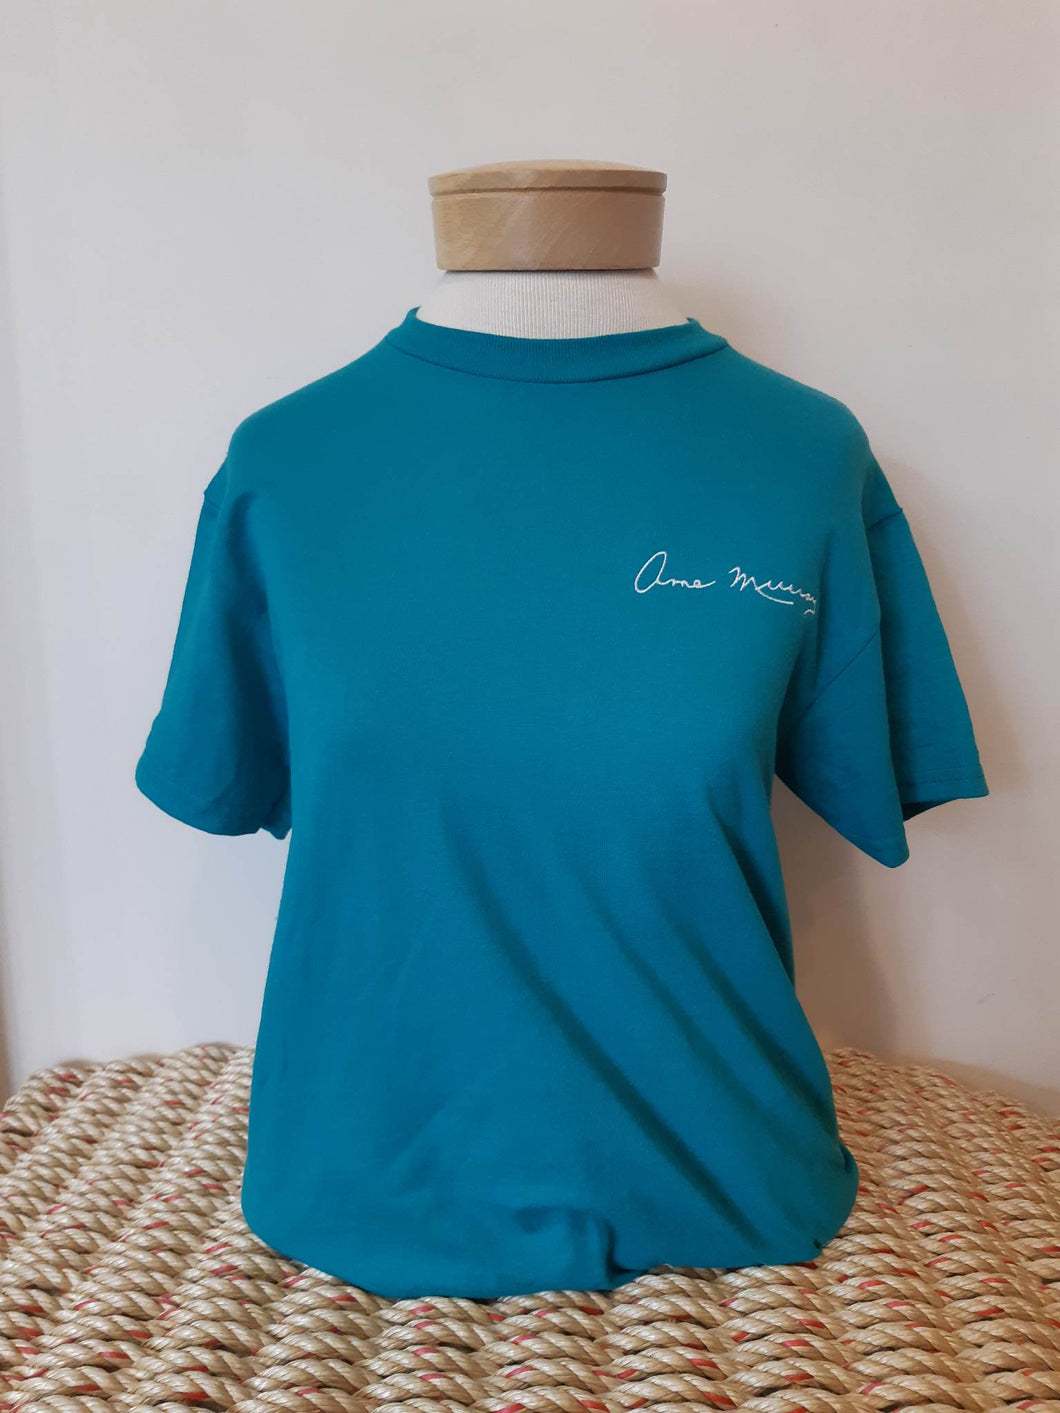 Anne Murray Signature T-shirt